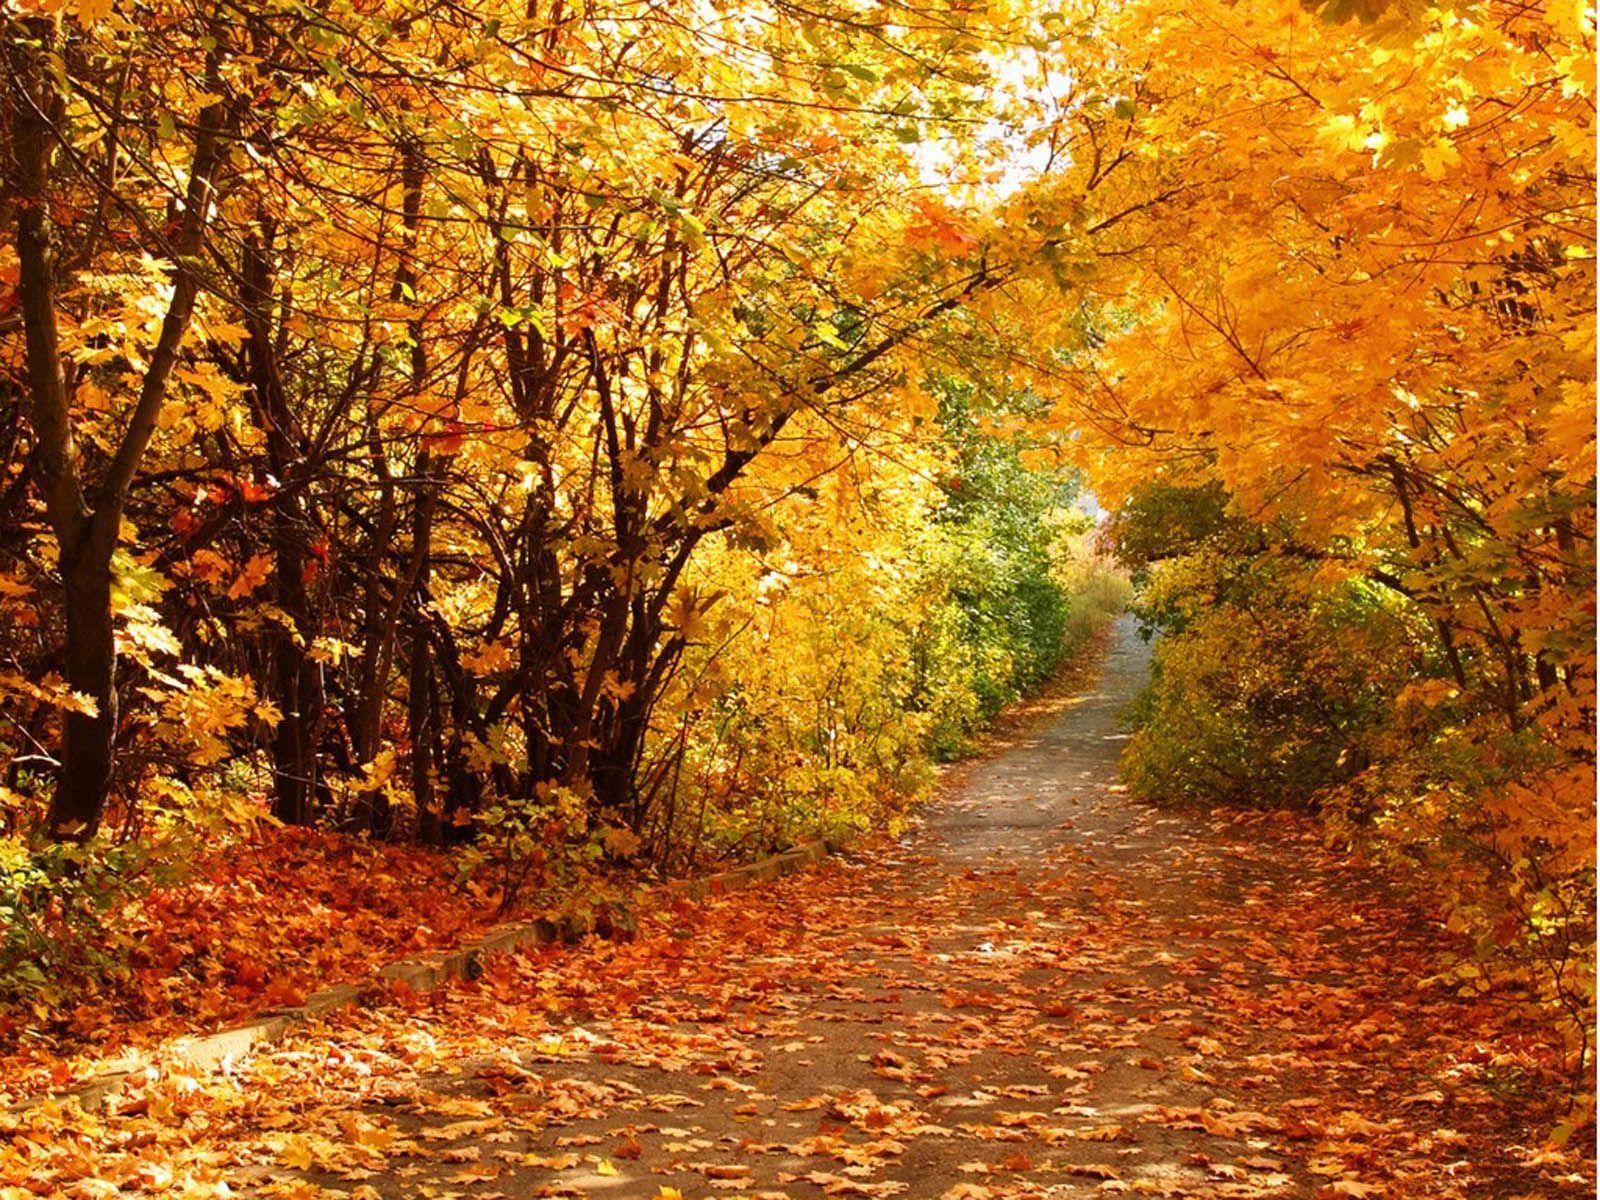 Autumn Scenery Desktop Wallpaper, Beautiful Autumn Scenery Desktop. Autumn scenery, Scenery wallpaper, Autumn phone wallpaper